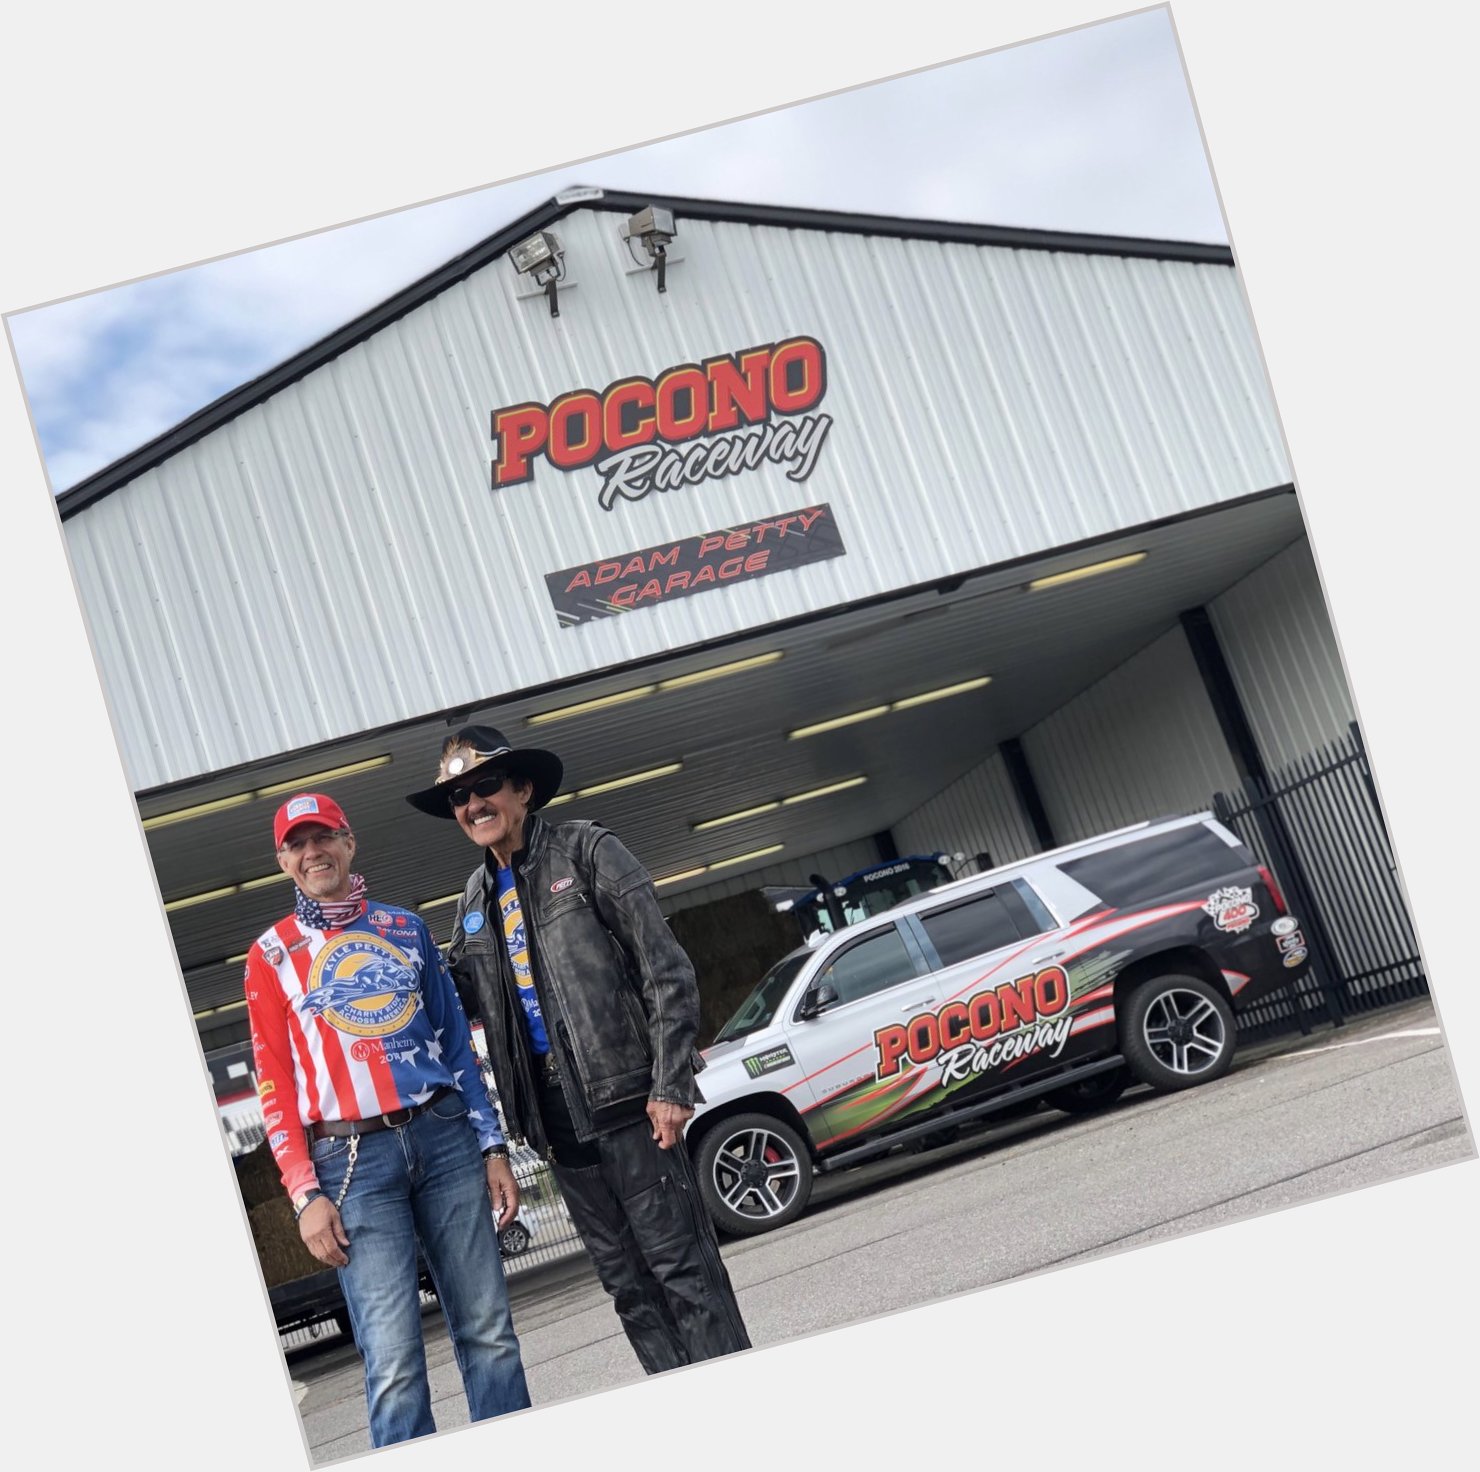 We remember Adam Petty every day here at Pocono Raceway with our Adam Petty Garage.

Happy Birthday, Adam. 